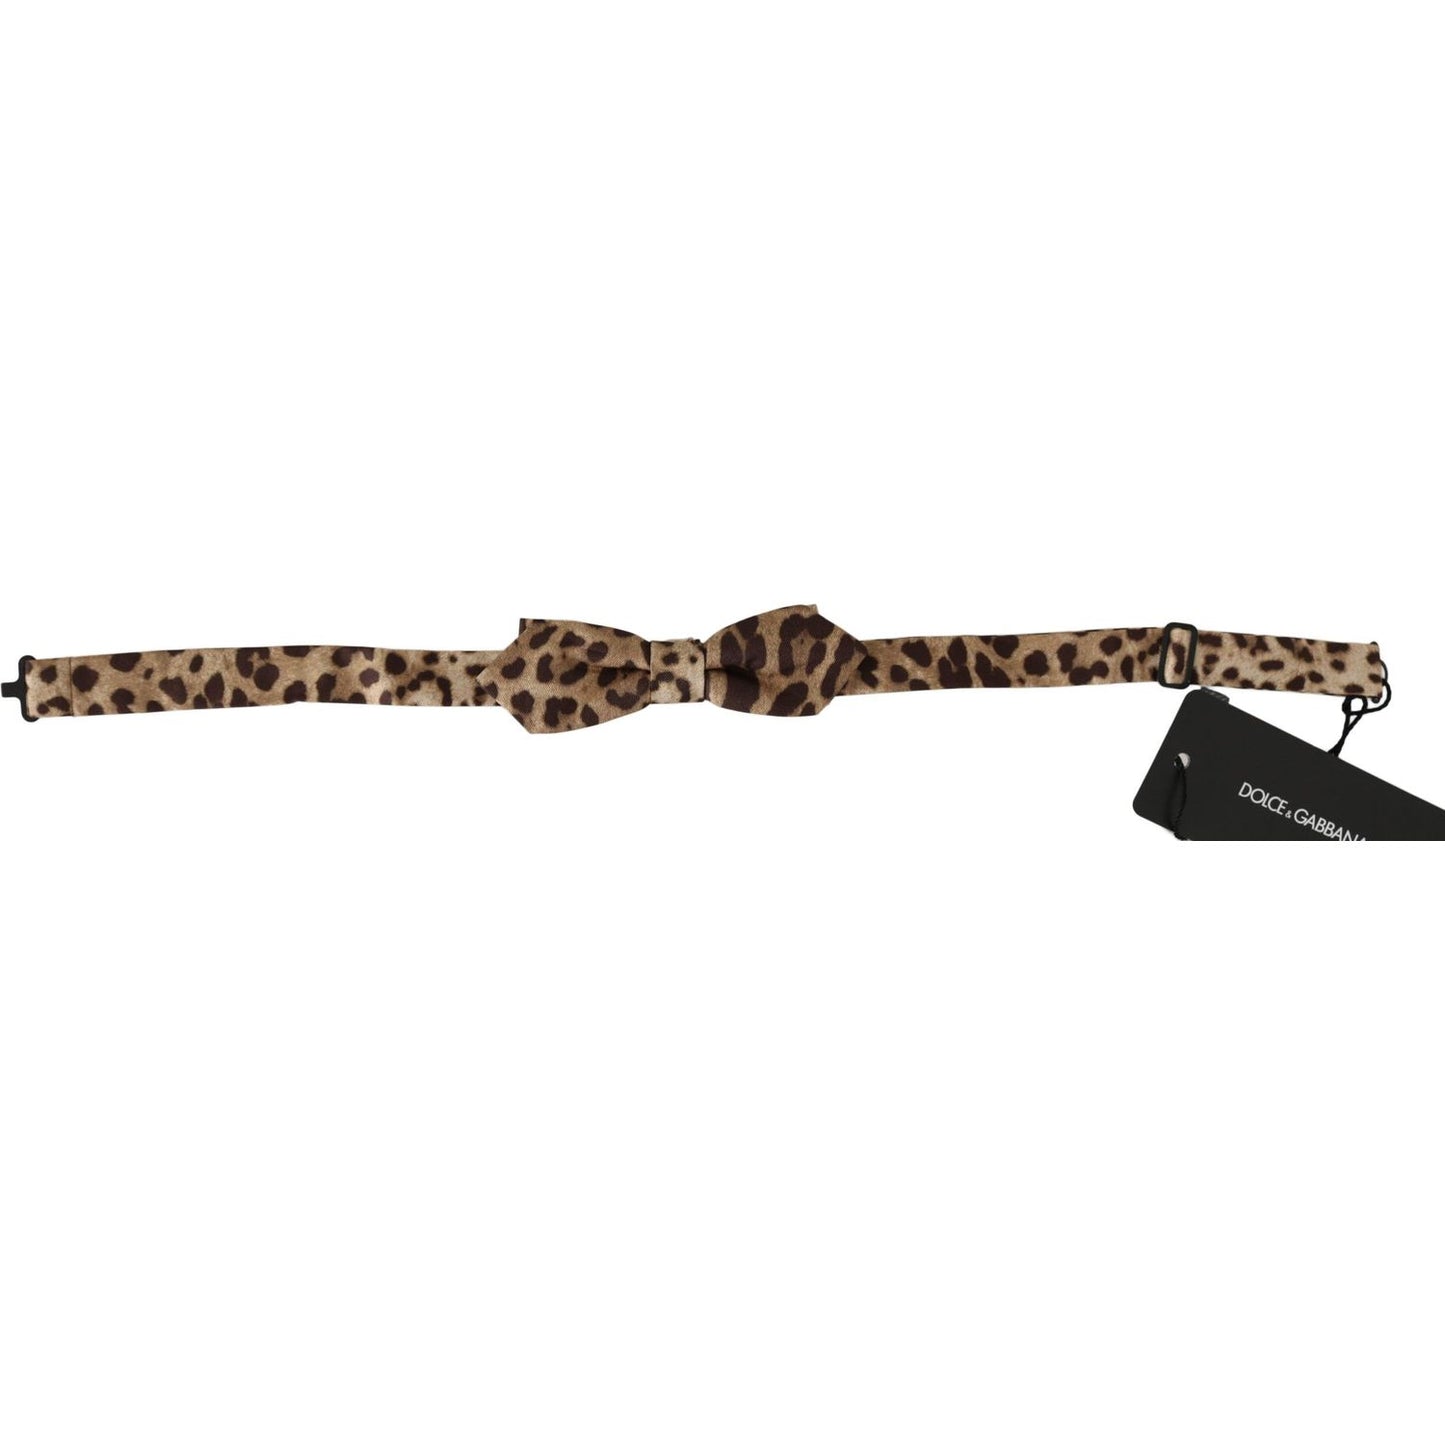 Exquisite Silk Leopard Print Bow Tie